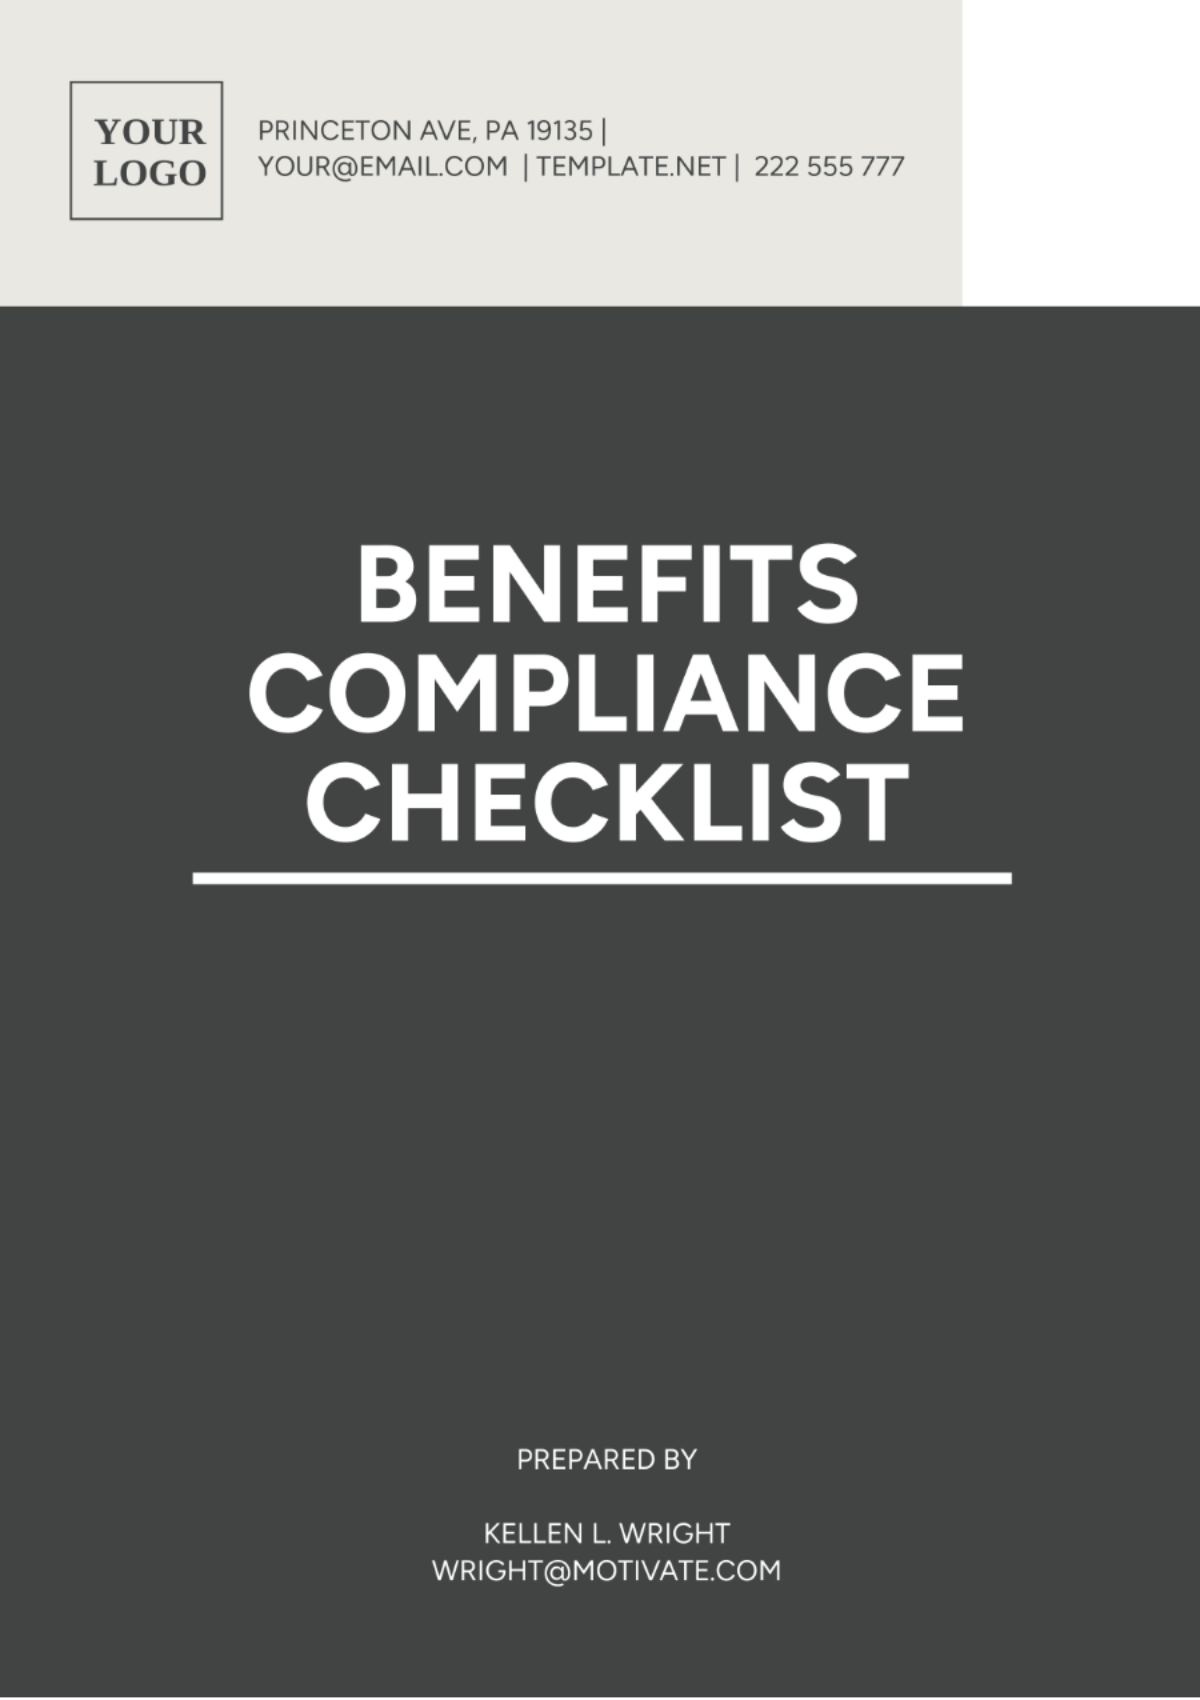 Benefits Compliance Checklist Template